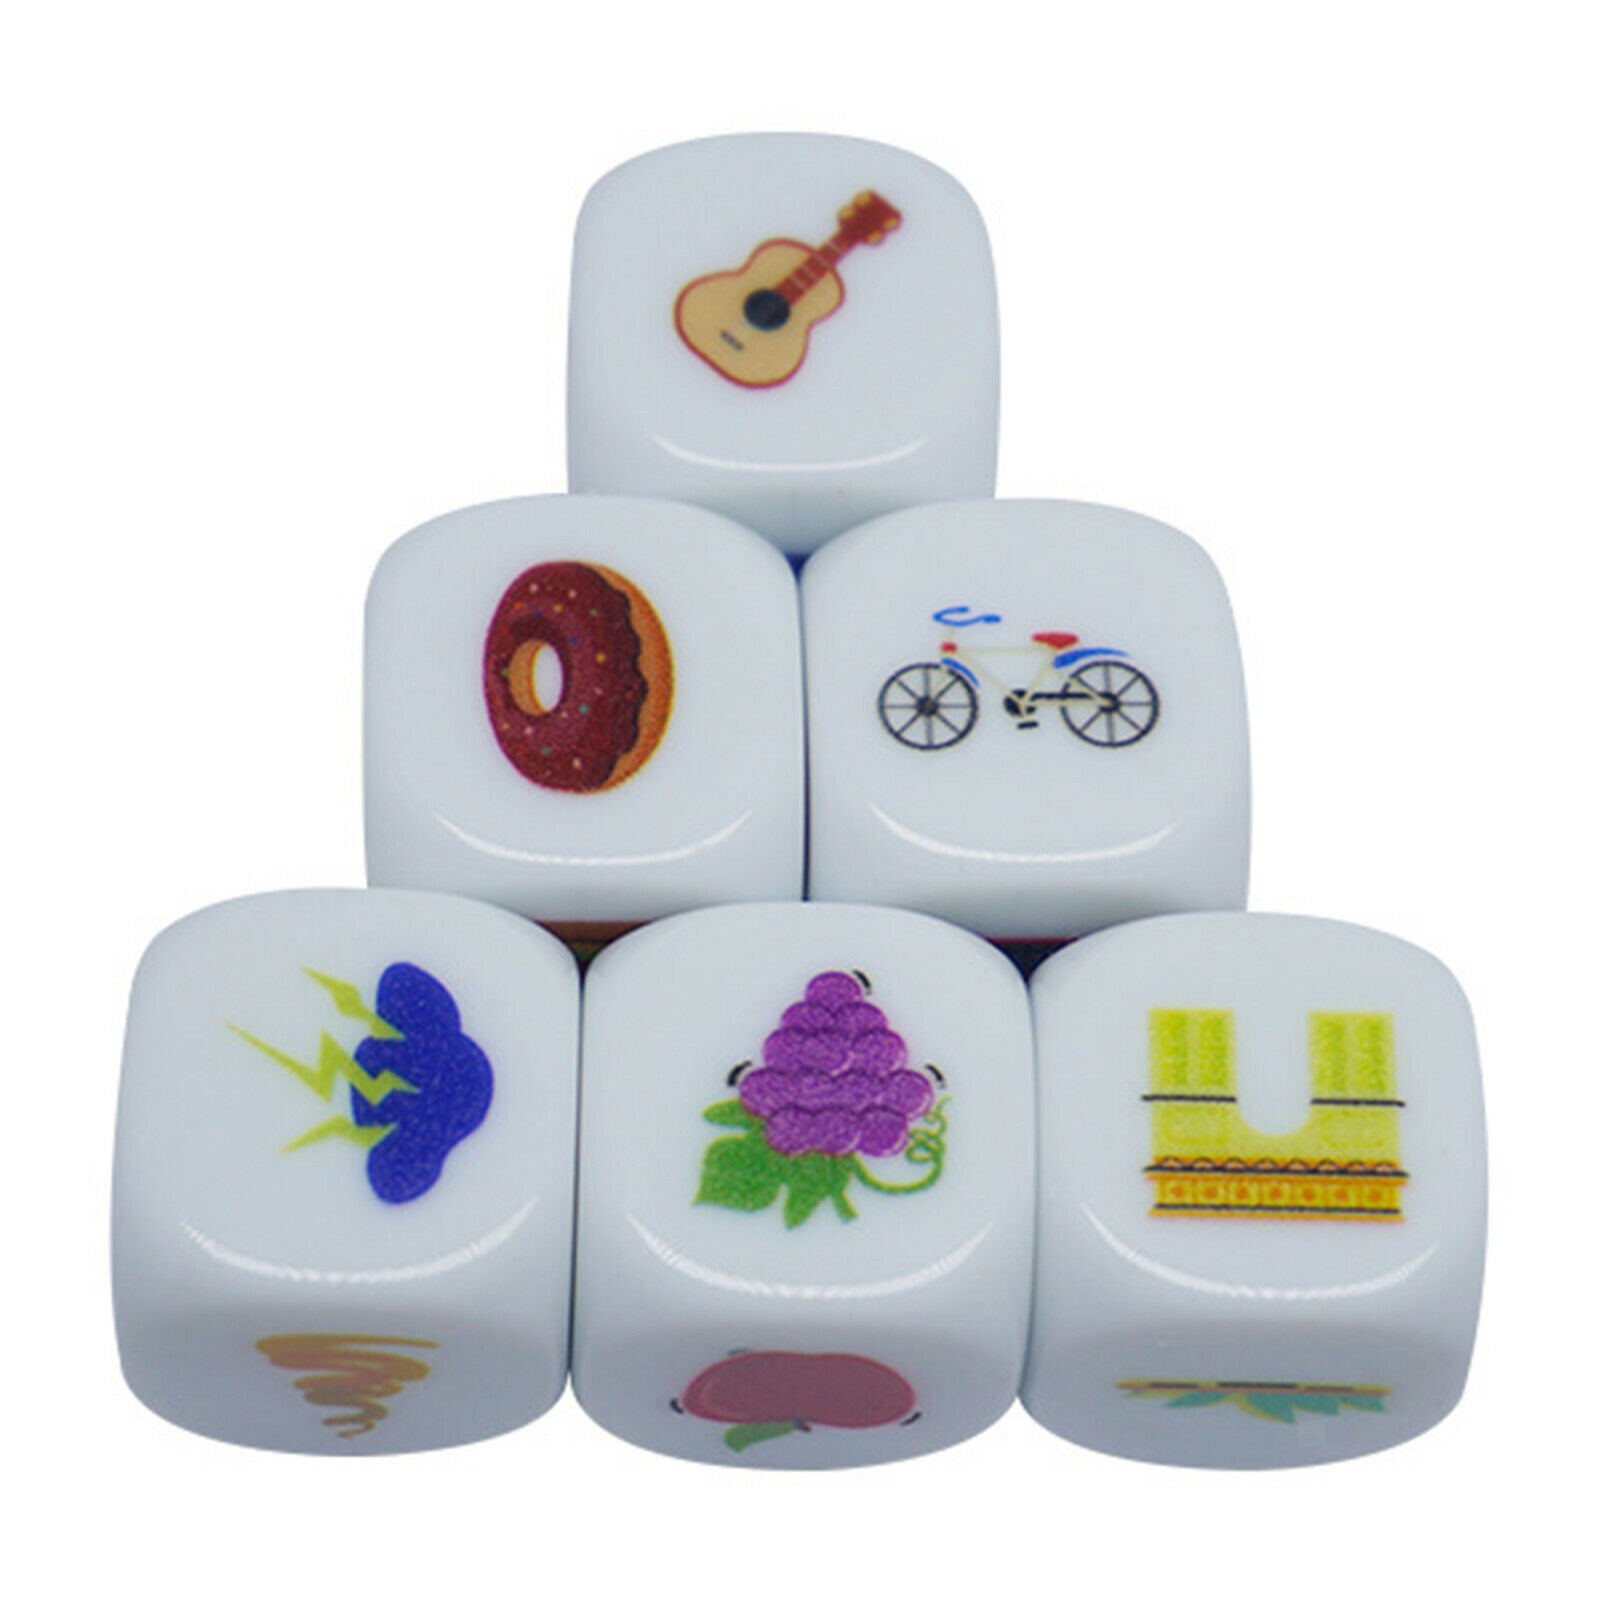 9x Acrylic Story Cubes Activity Game Educational Toys Educational Playset